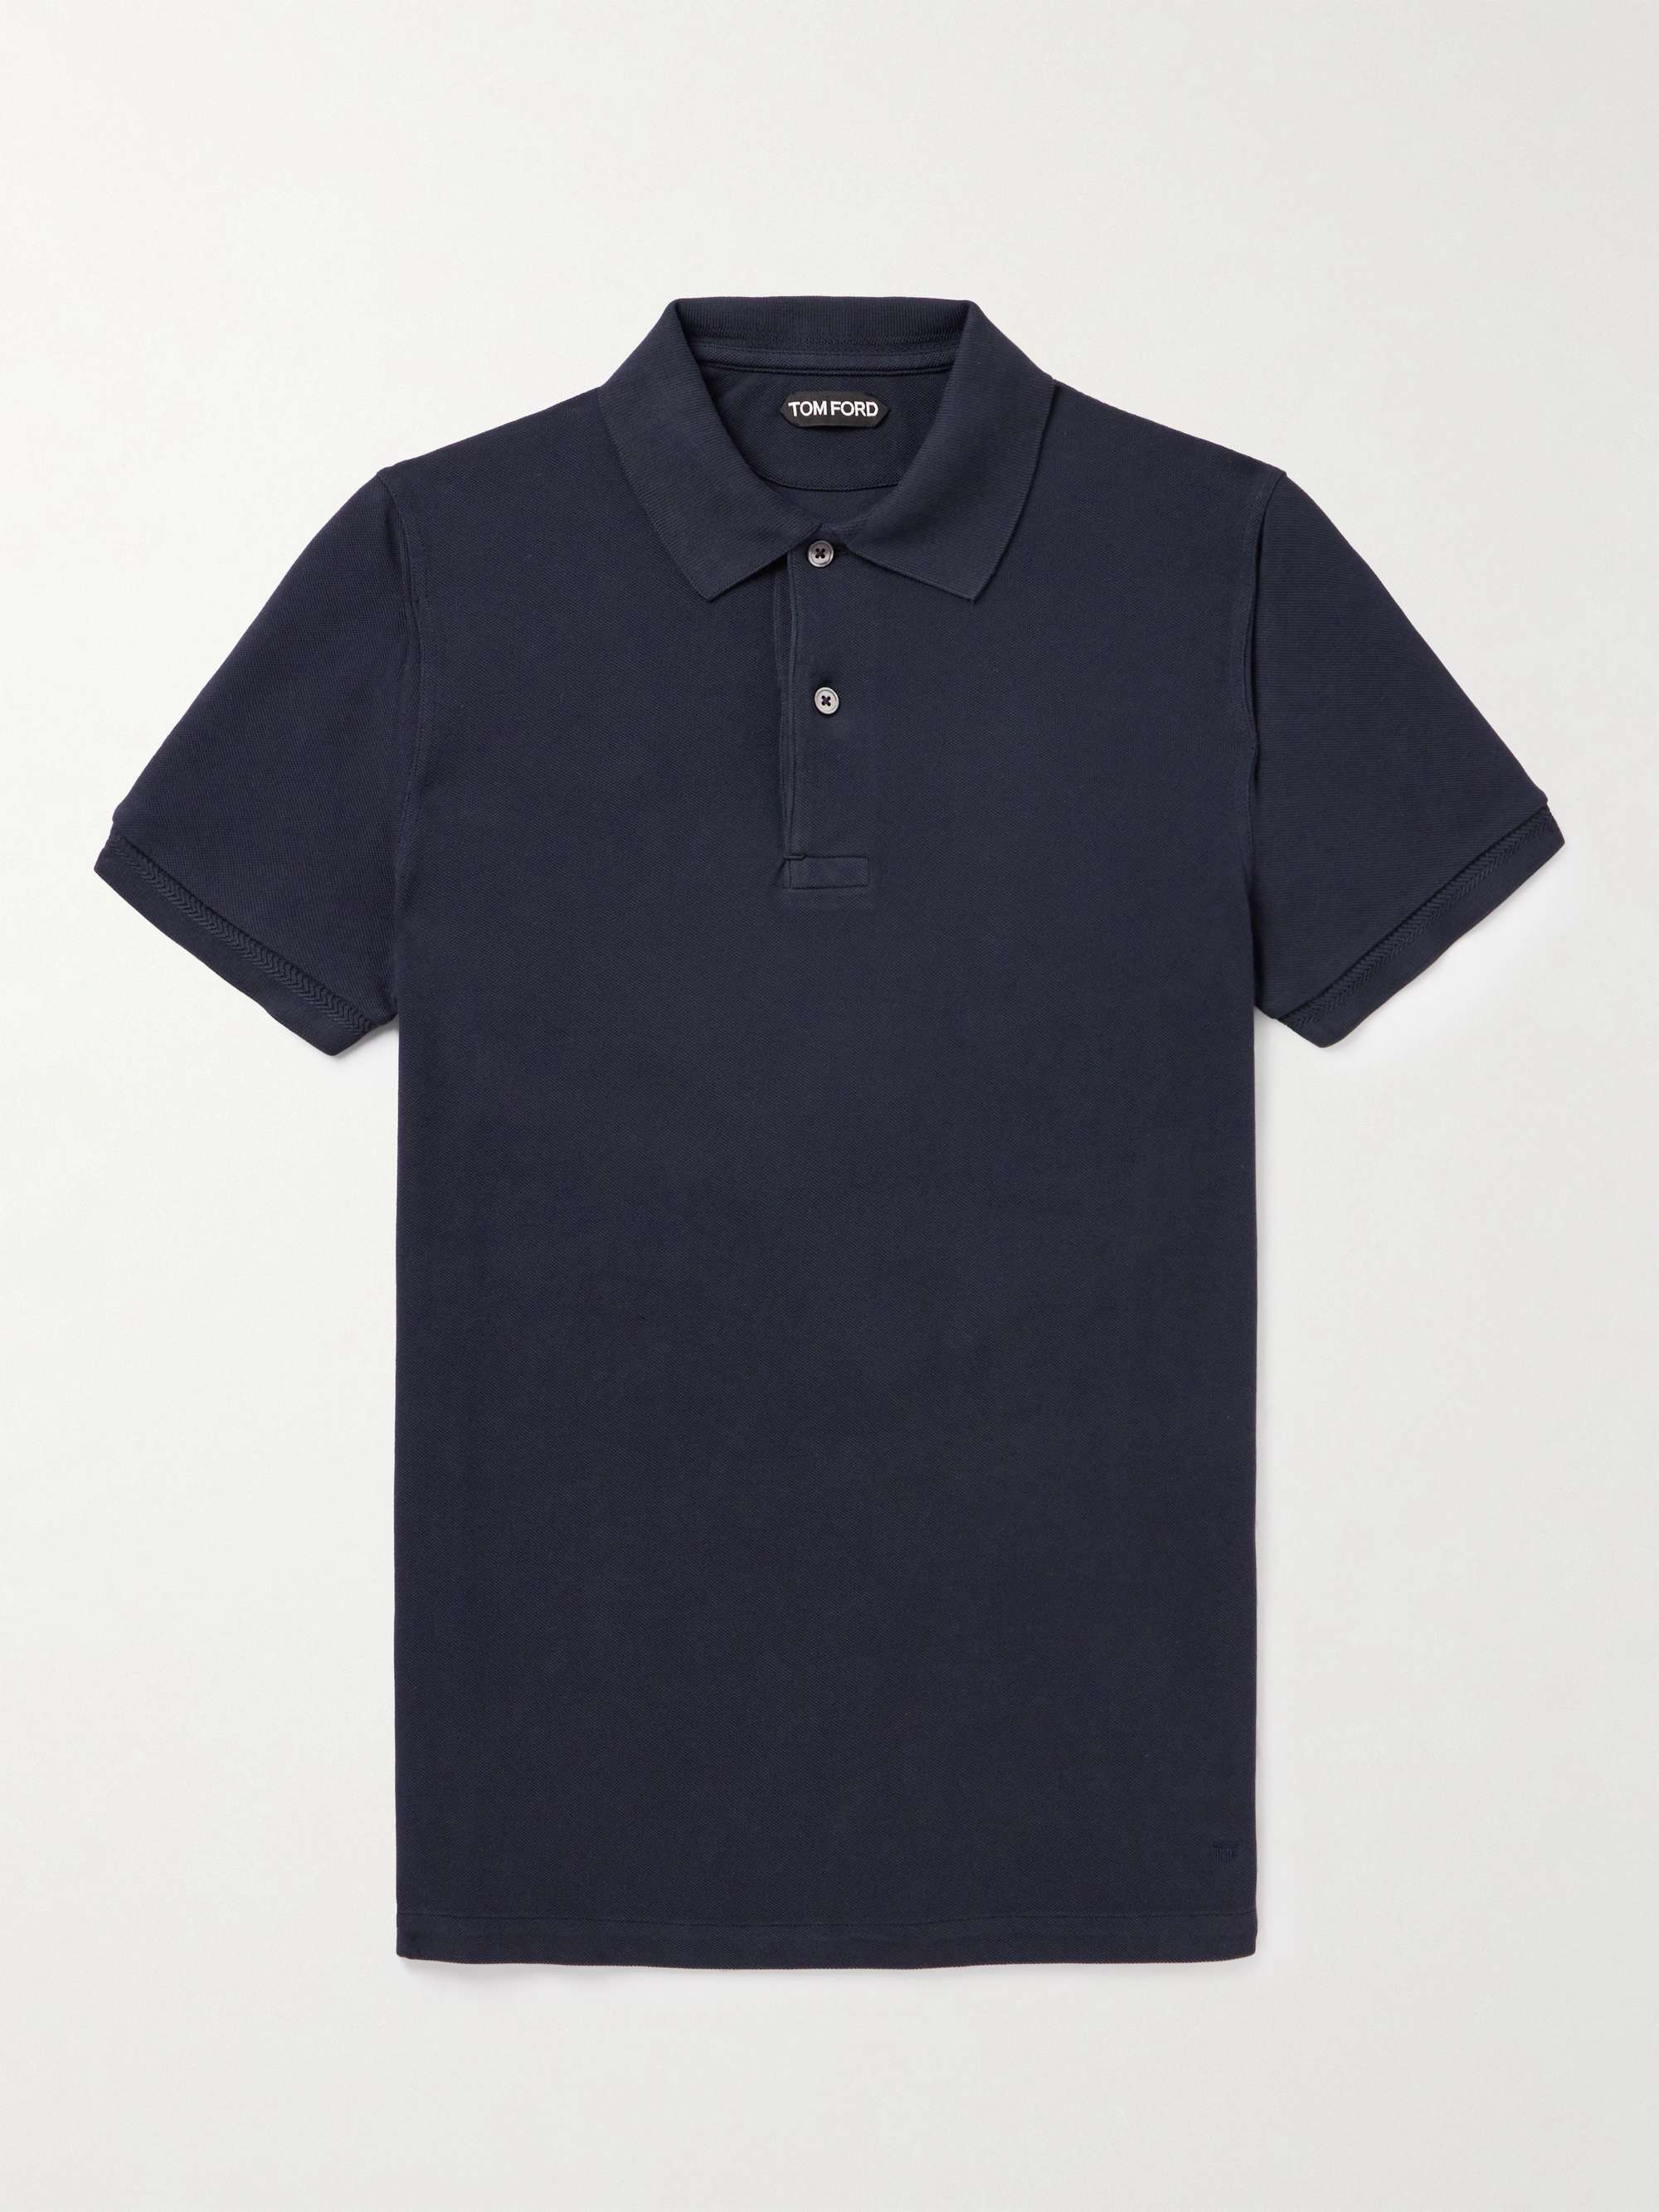 TOM FORD Garment-Dyed Cotton-Piqué Polo Shirt for Men | MR PORTER